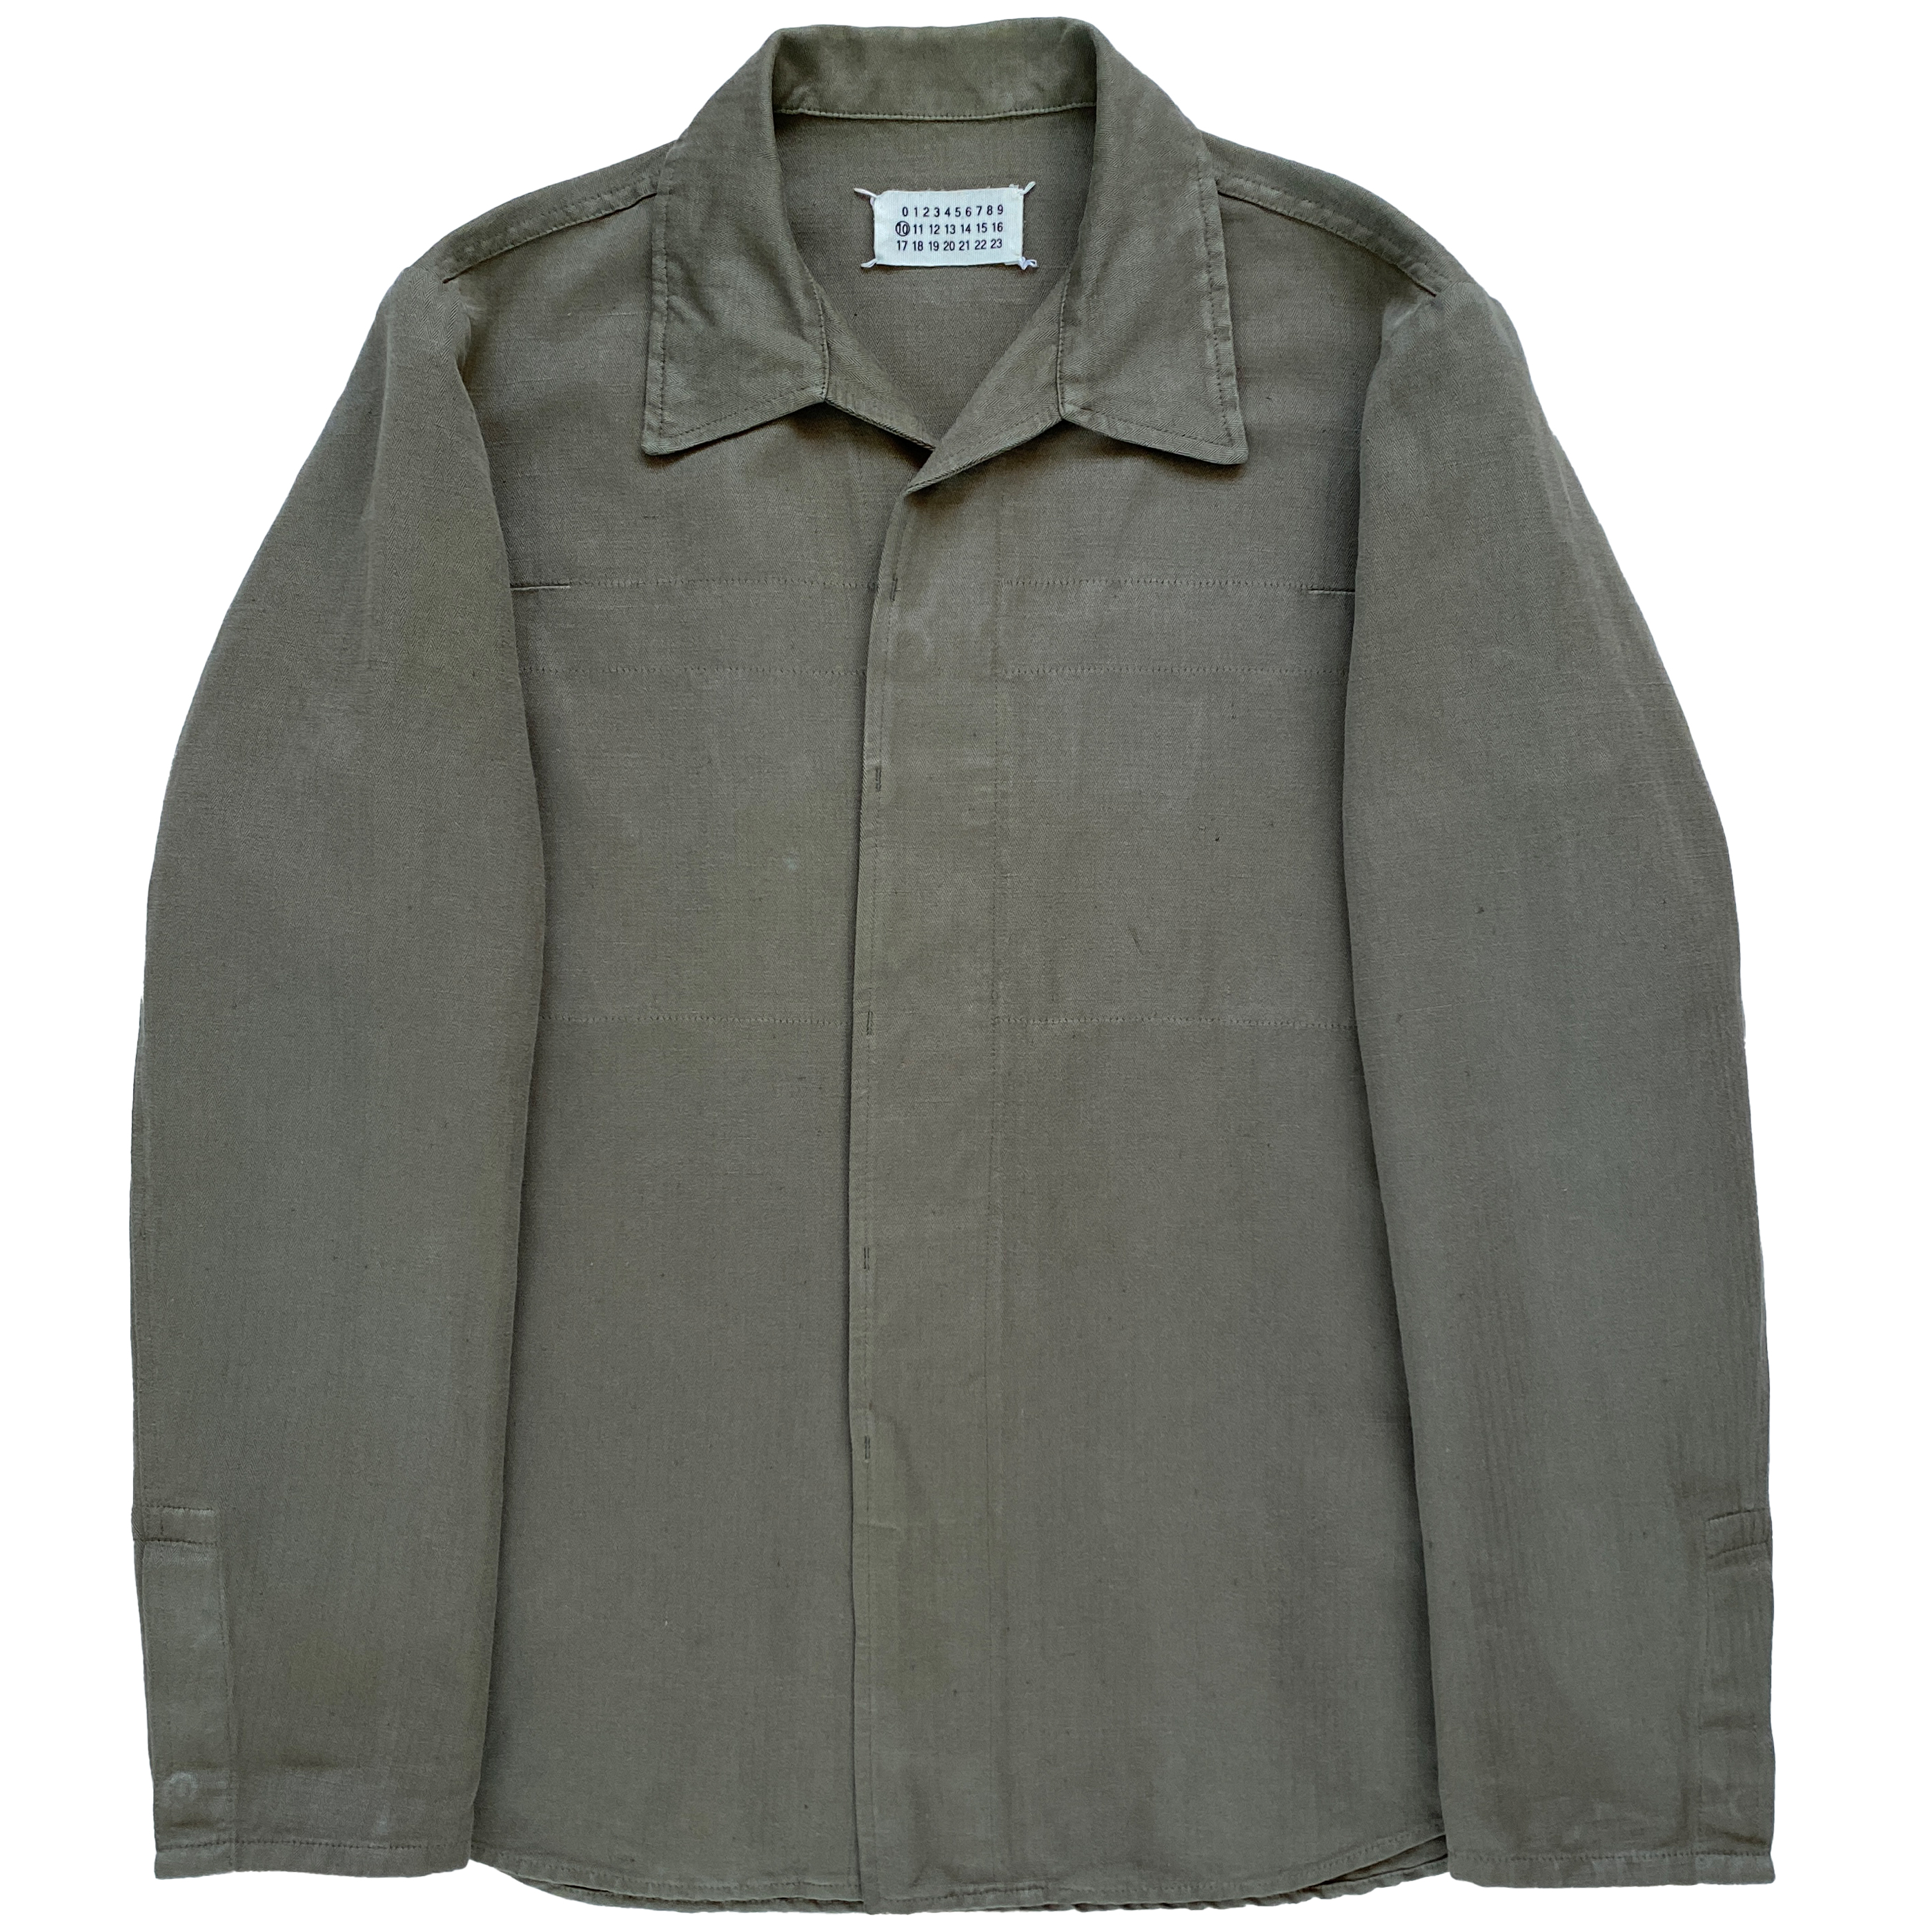 Maison Martin Margiela, S/S 2000 Military Over-shirt Jacket - La 